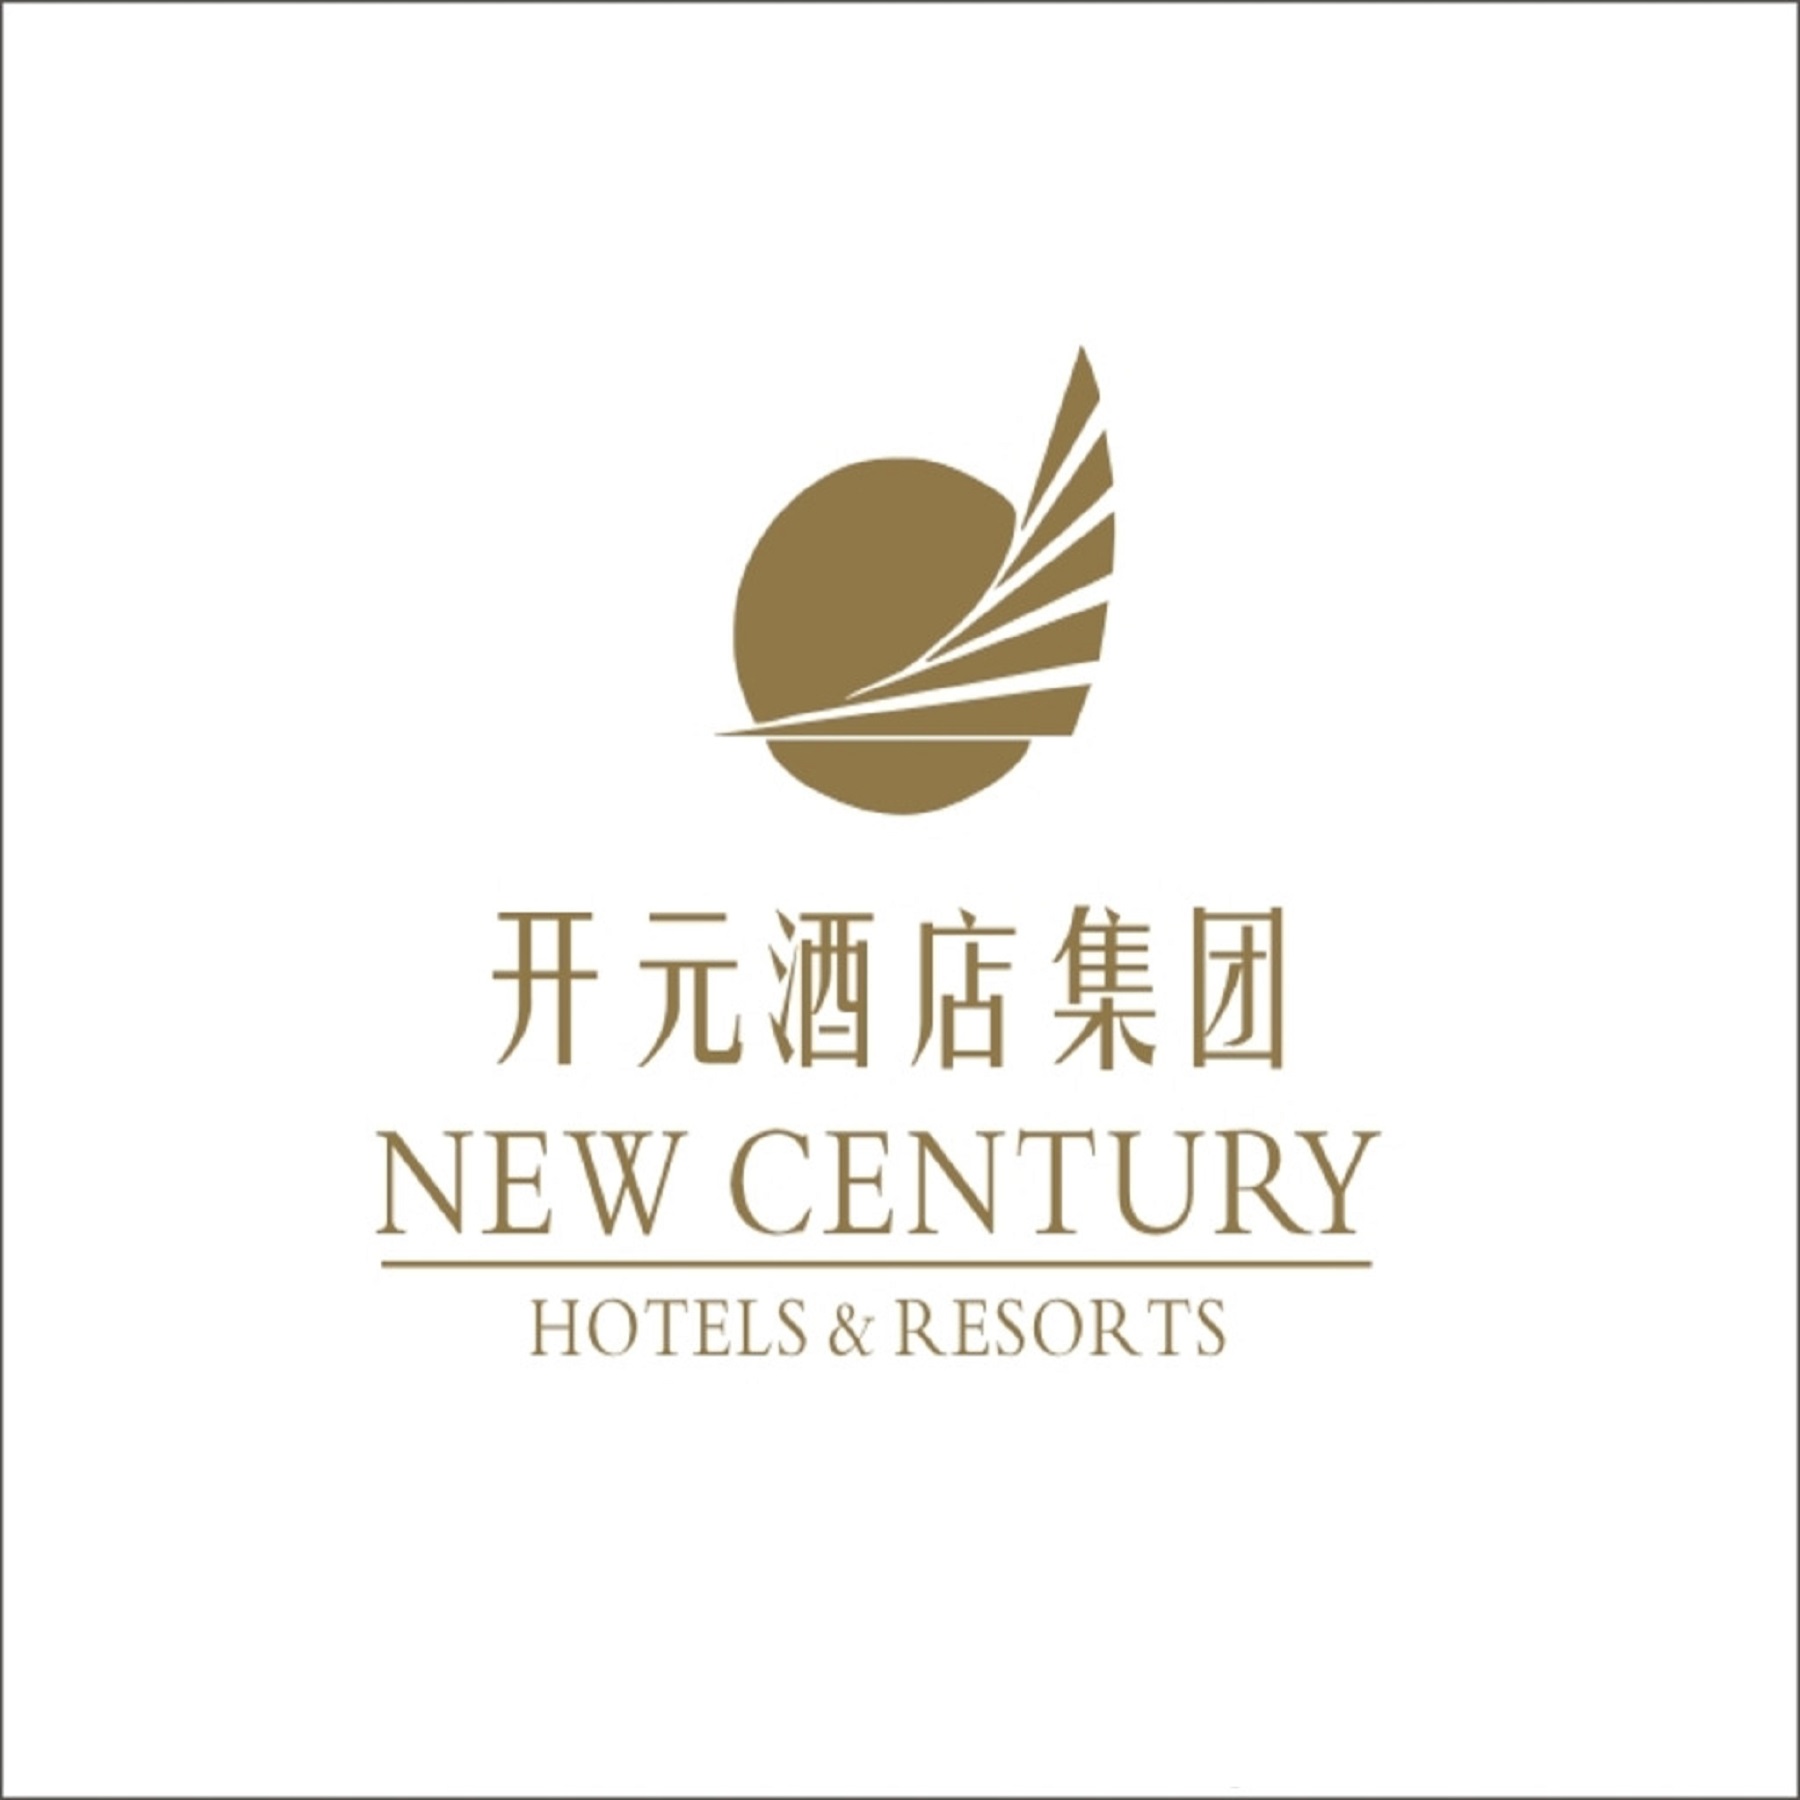 New Century Hotels & Resorts Brand Logo